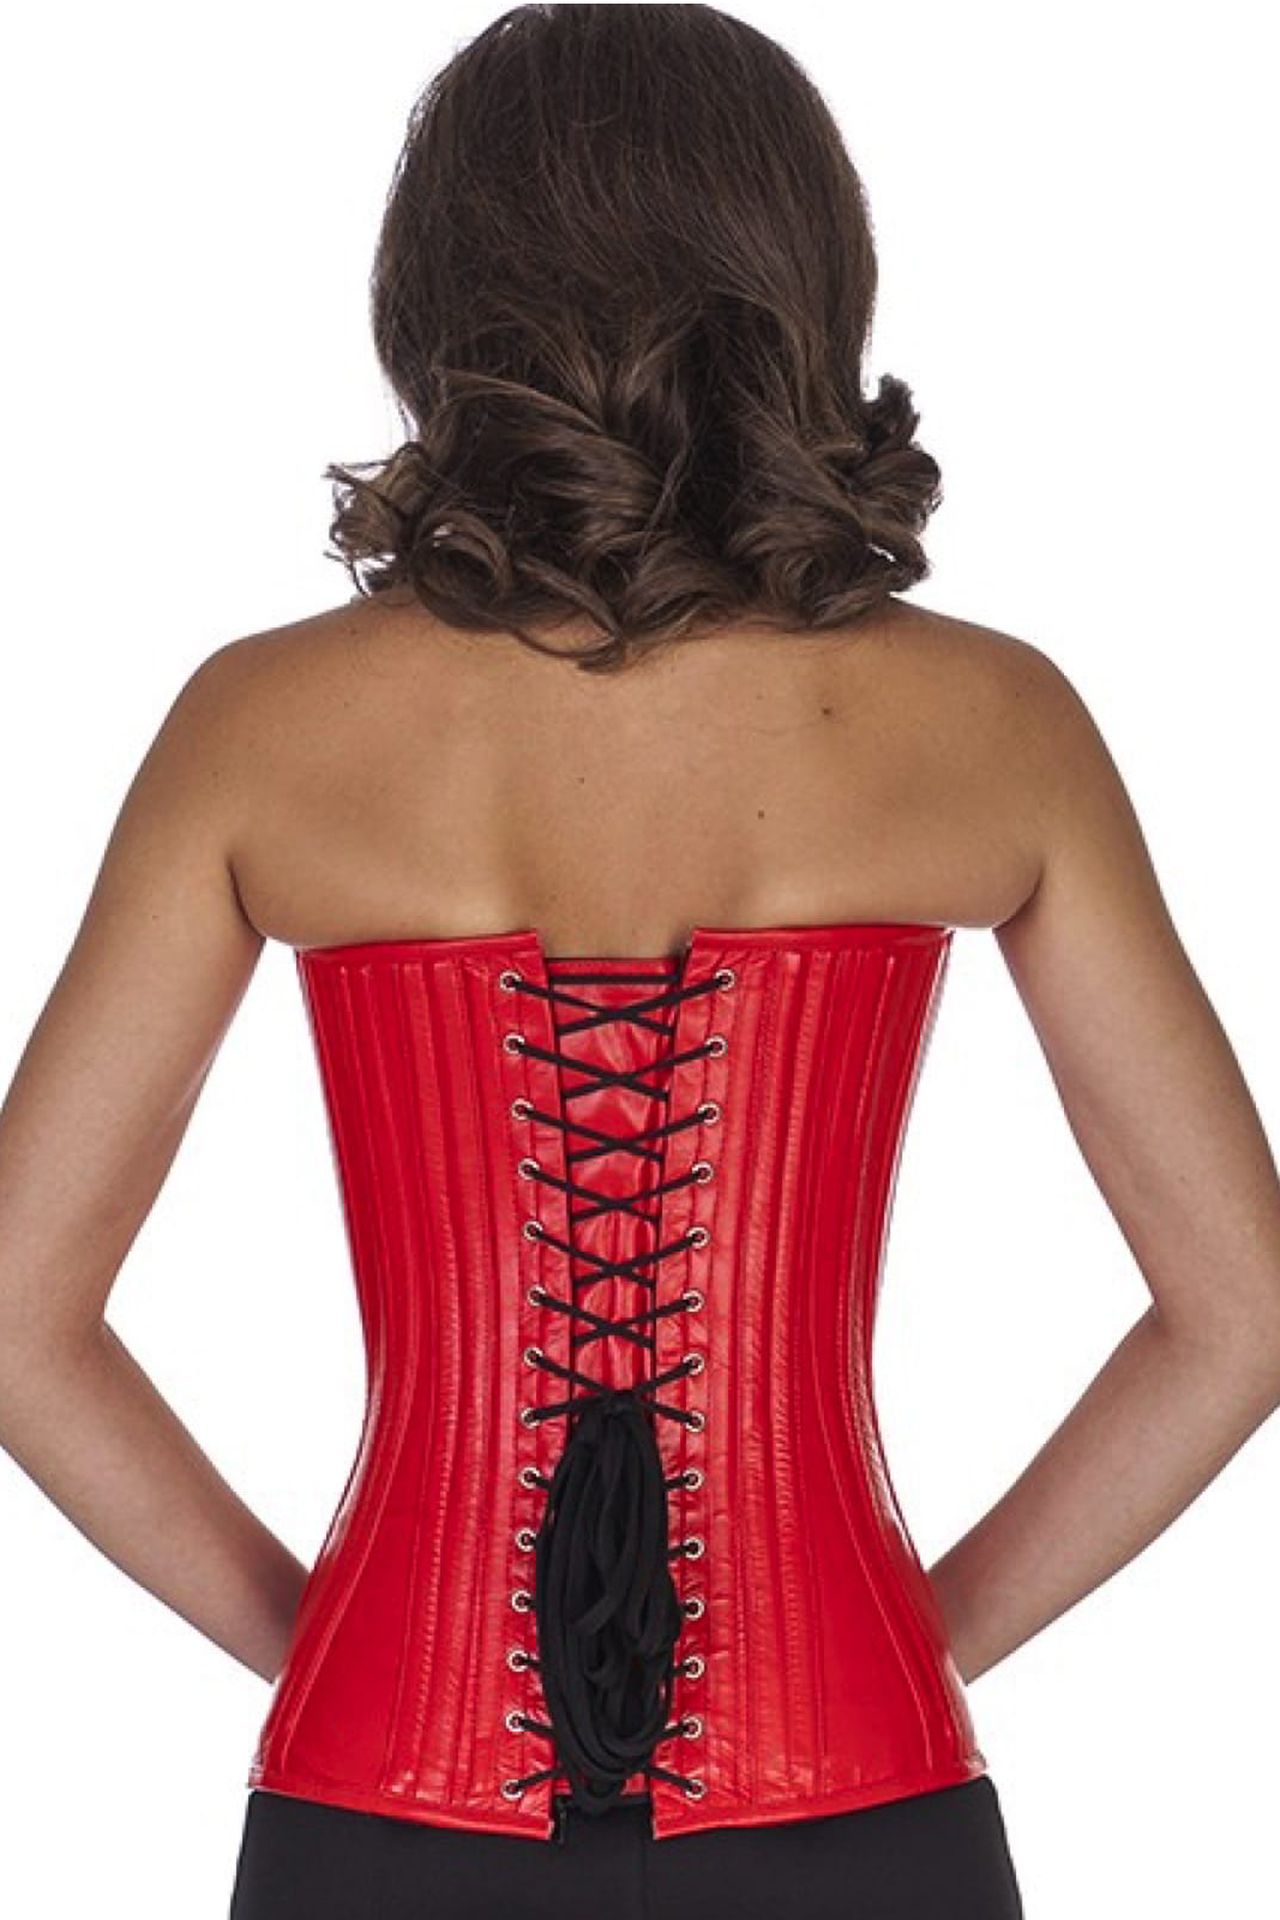 Leren corset rood volborst plunge diep decolleté Korset ll23